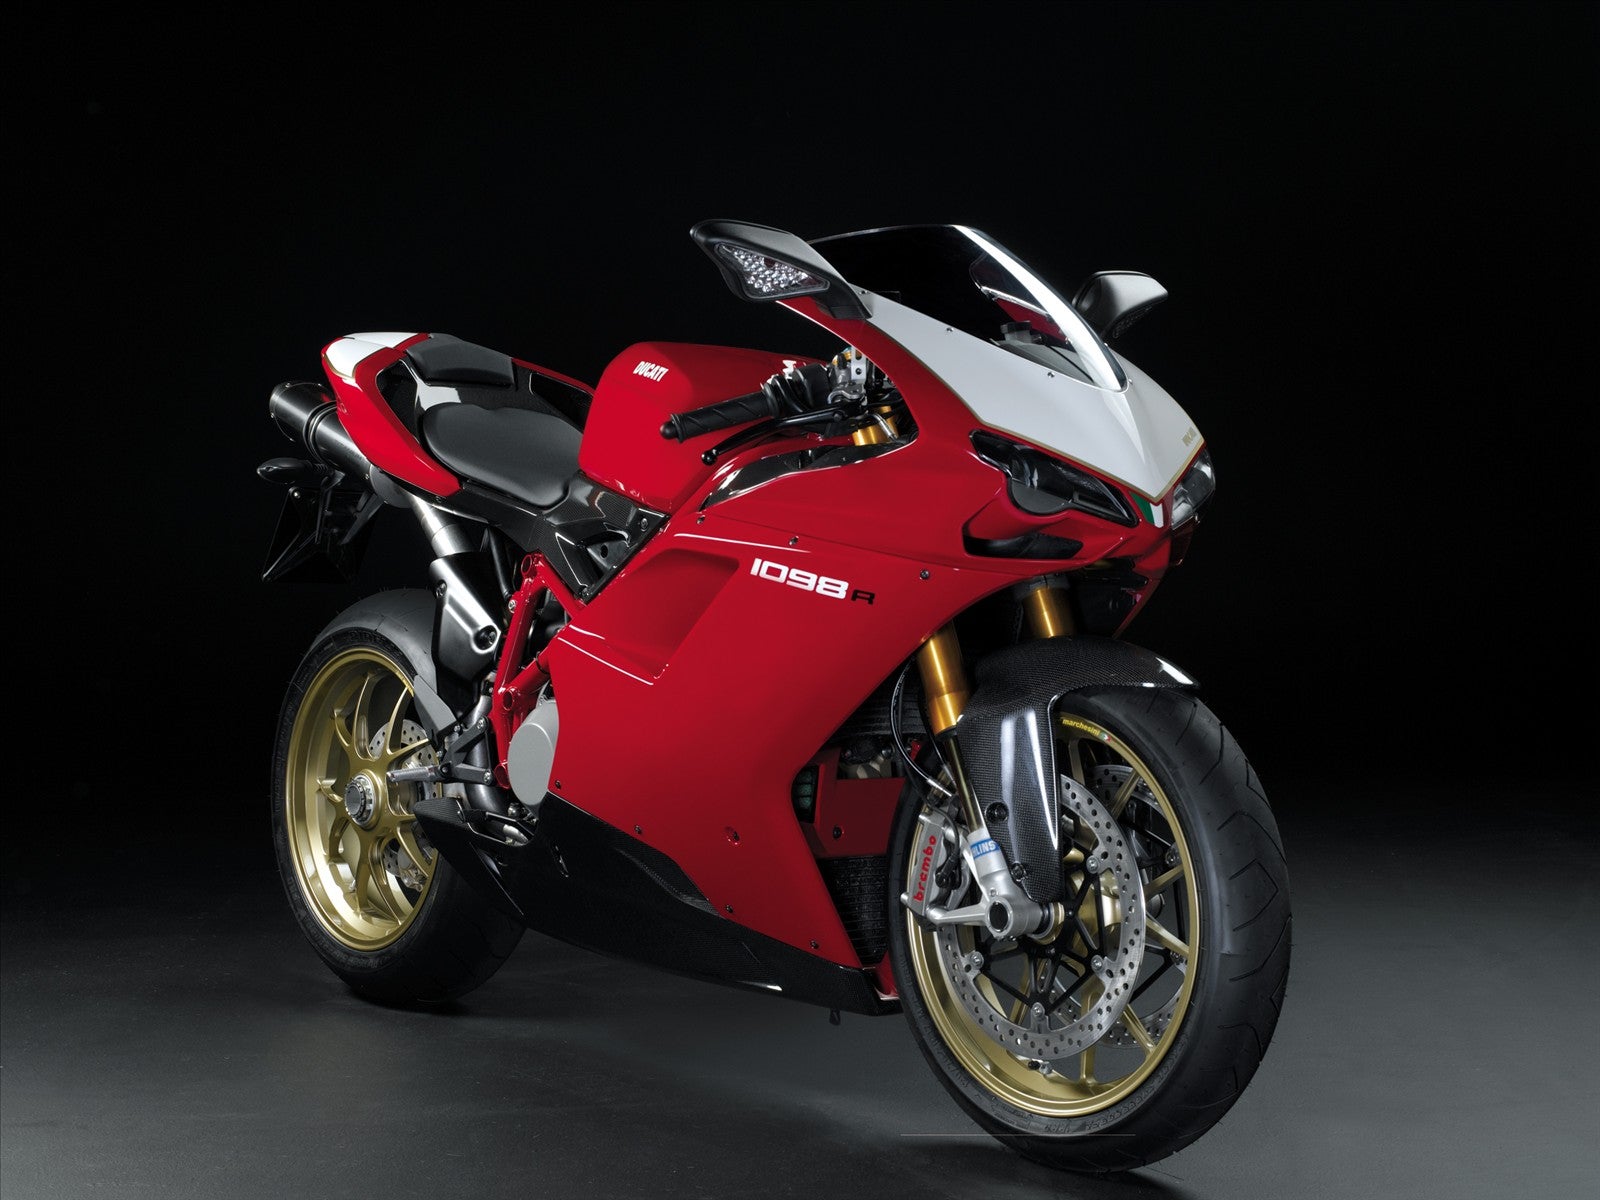 [Image: Ducati_1098R_2009_005.jpg]